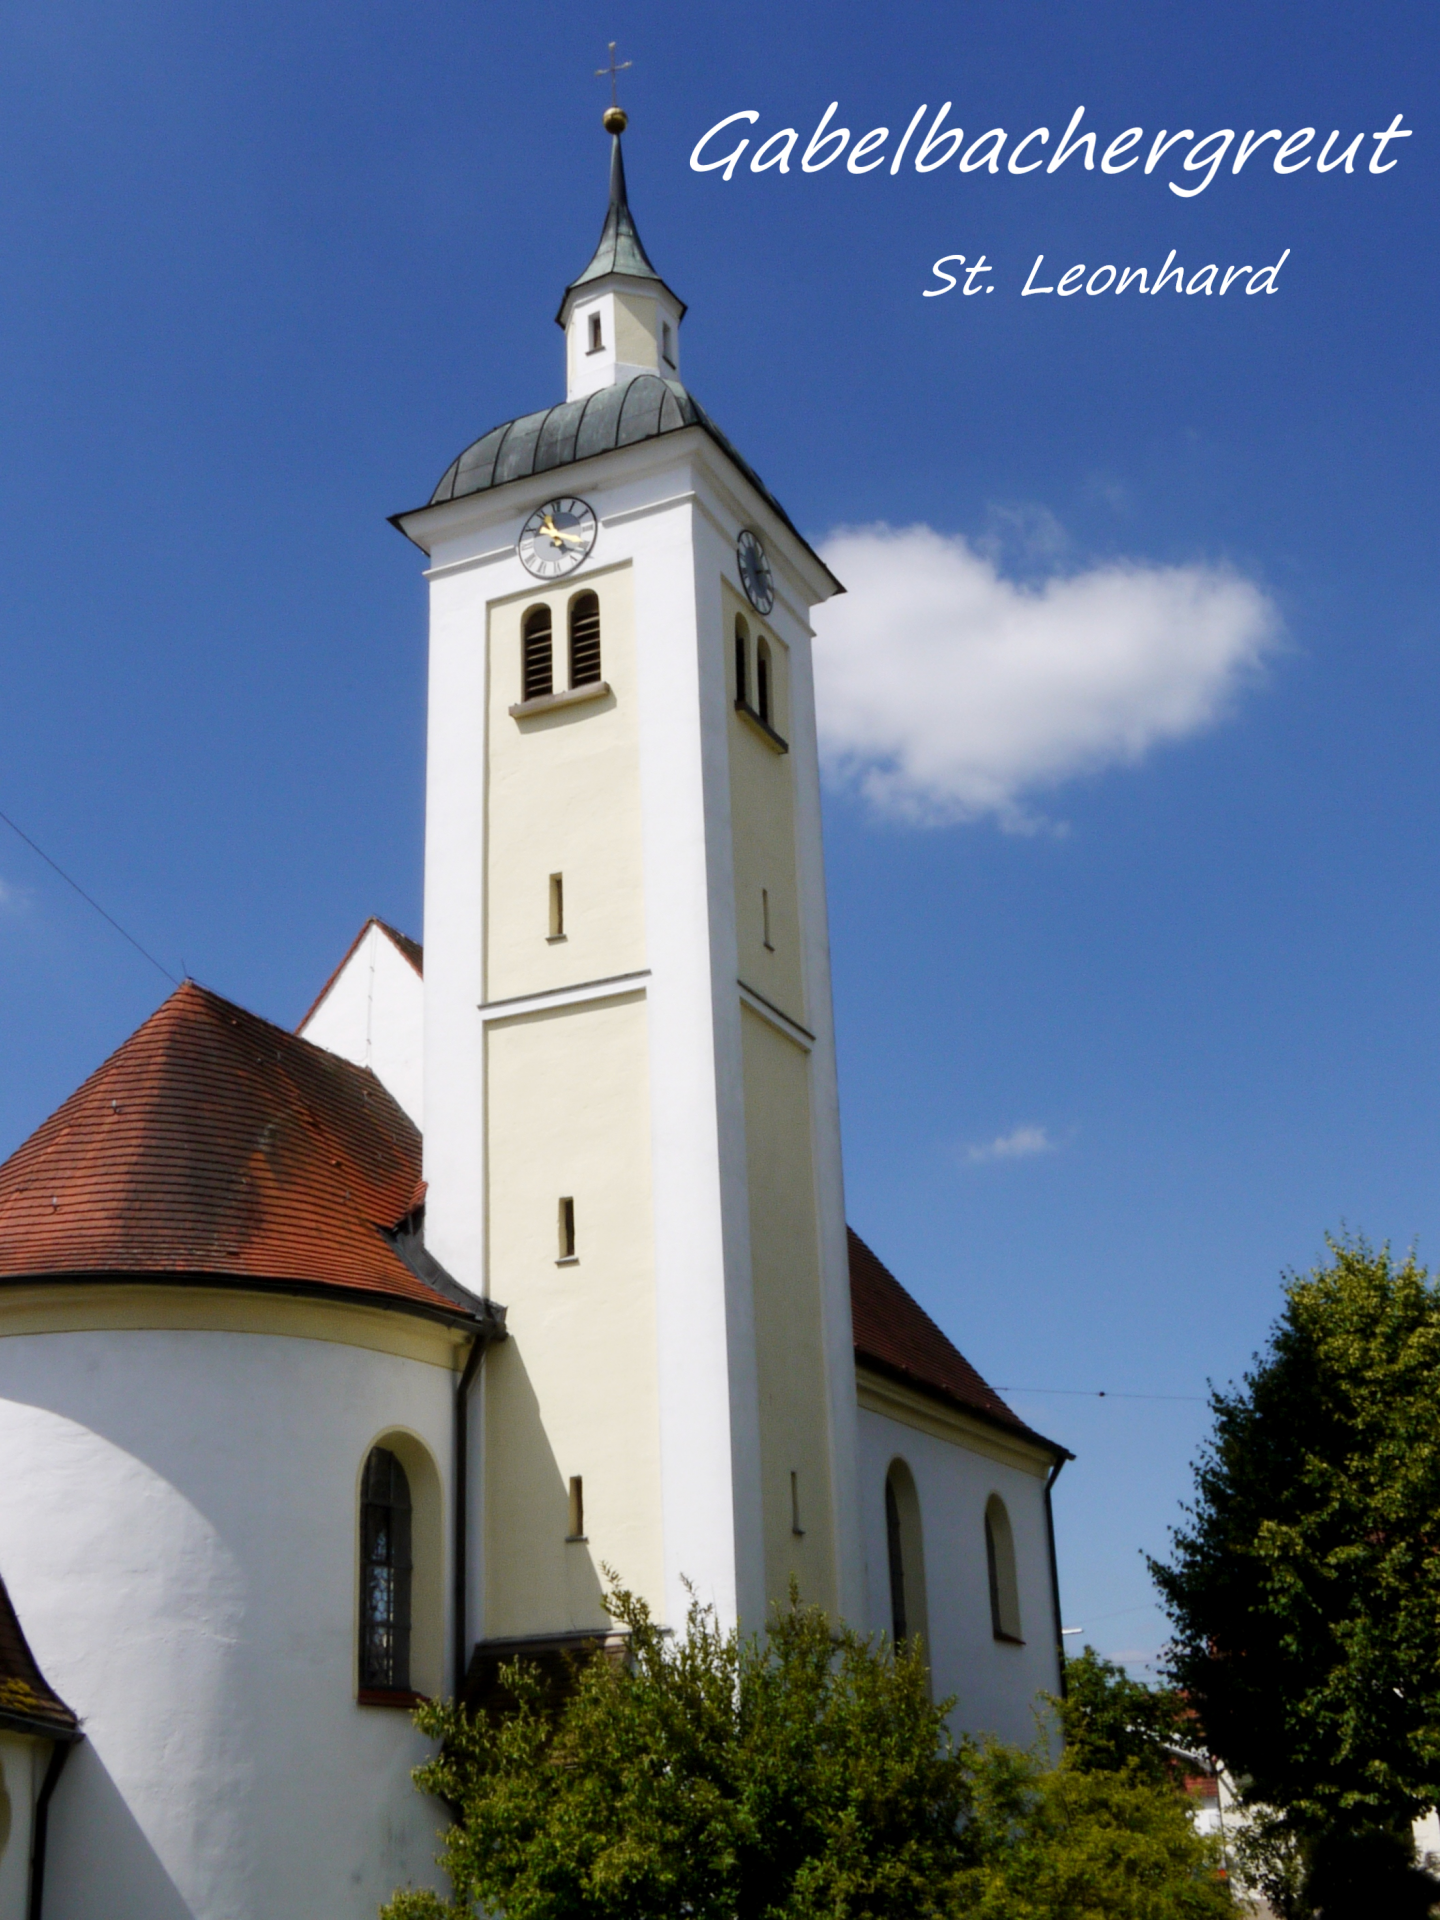 Gabelbachergreut, Kirchturm St. Leonhard; Foto: Max Trometer